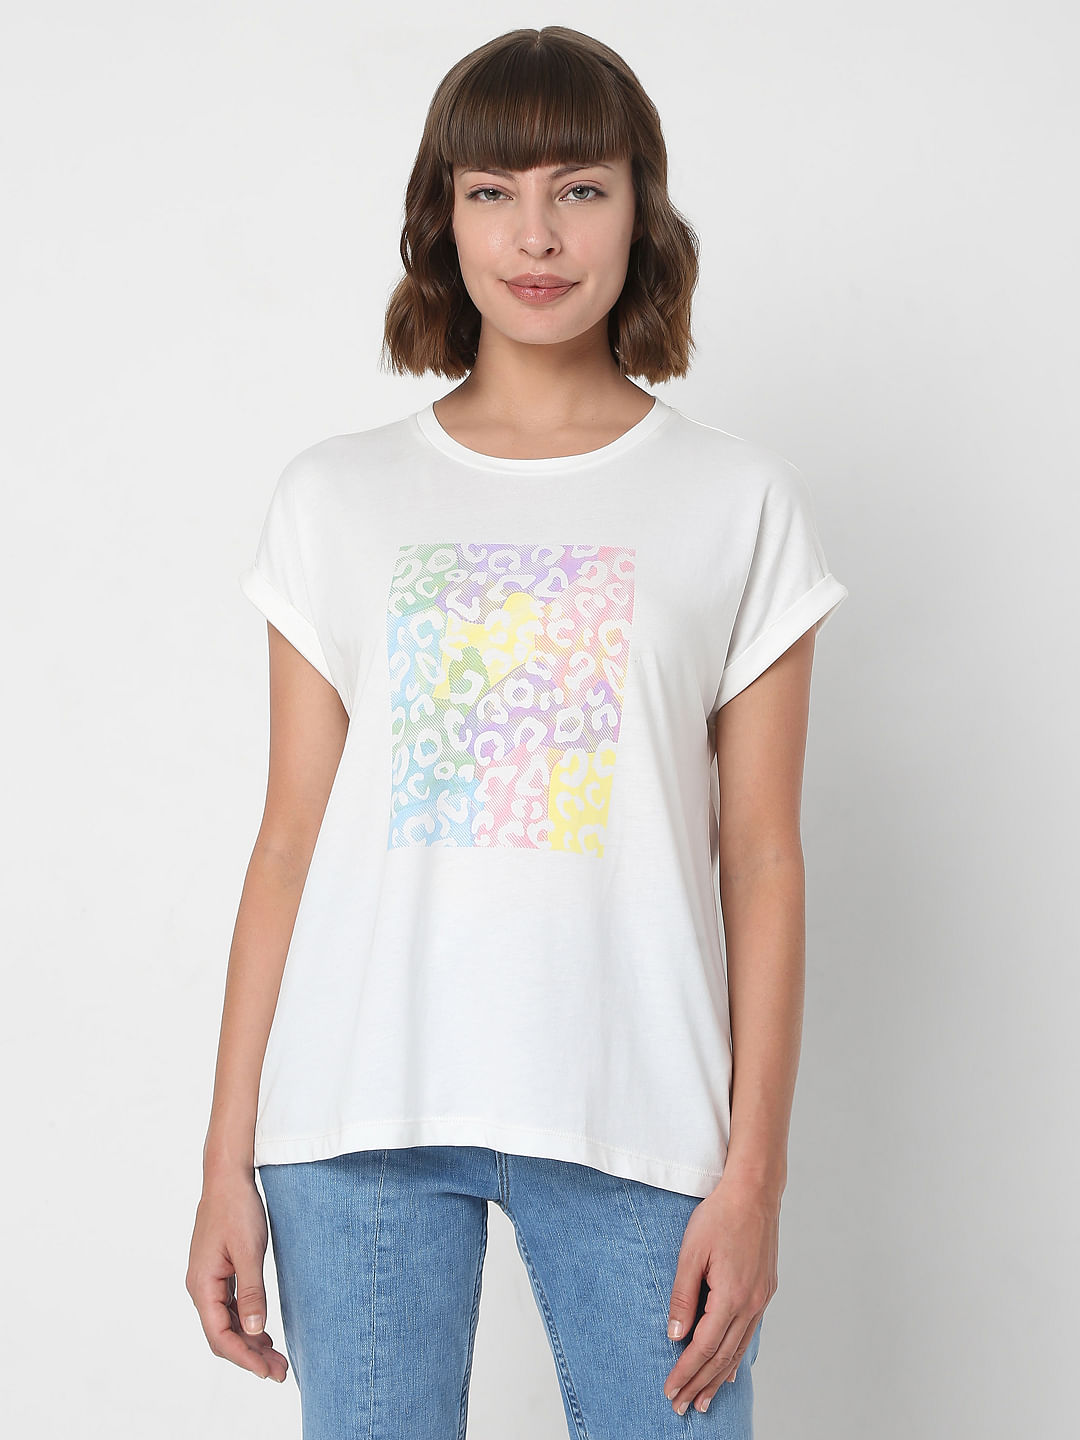 discount 81% WOMEN FASHION Shirts & T-shirts Elegant White M Primark blouse 